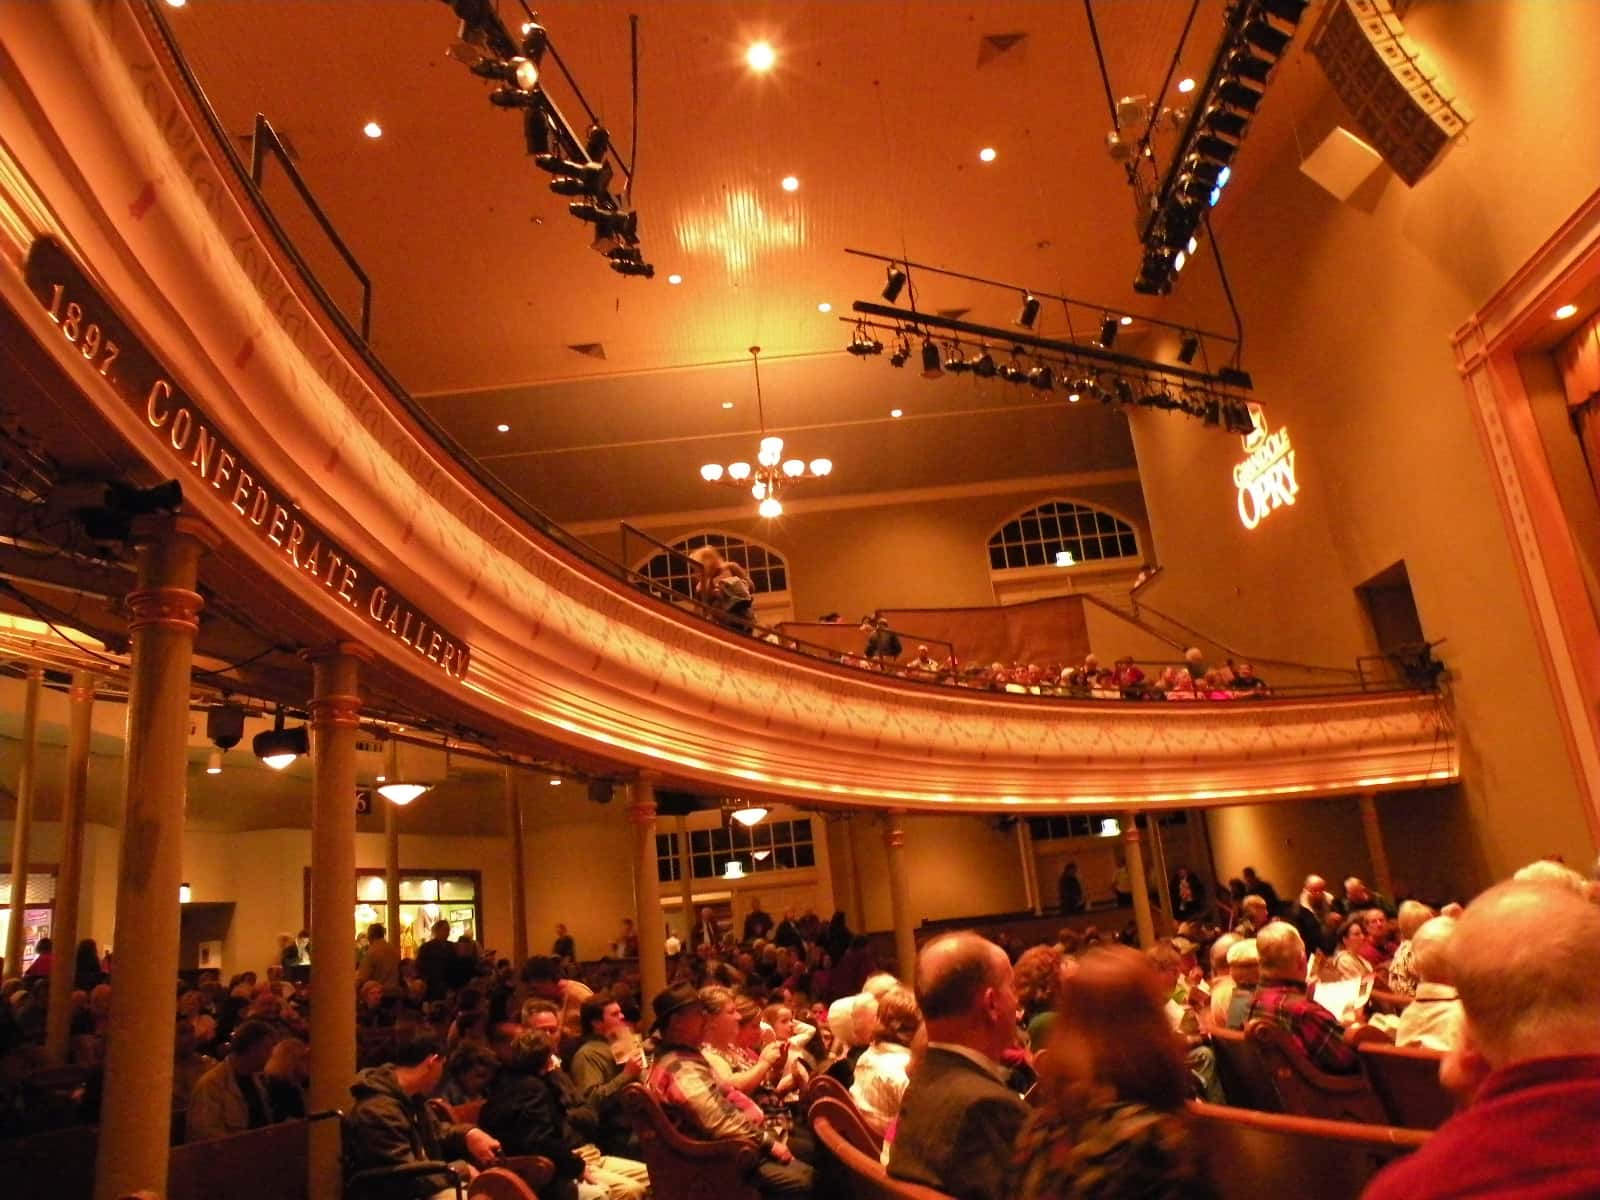 Interior of old musical theatre